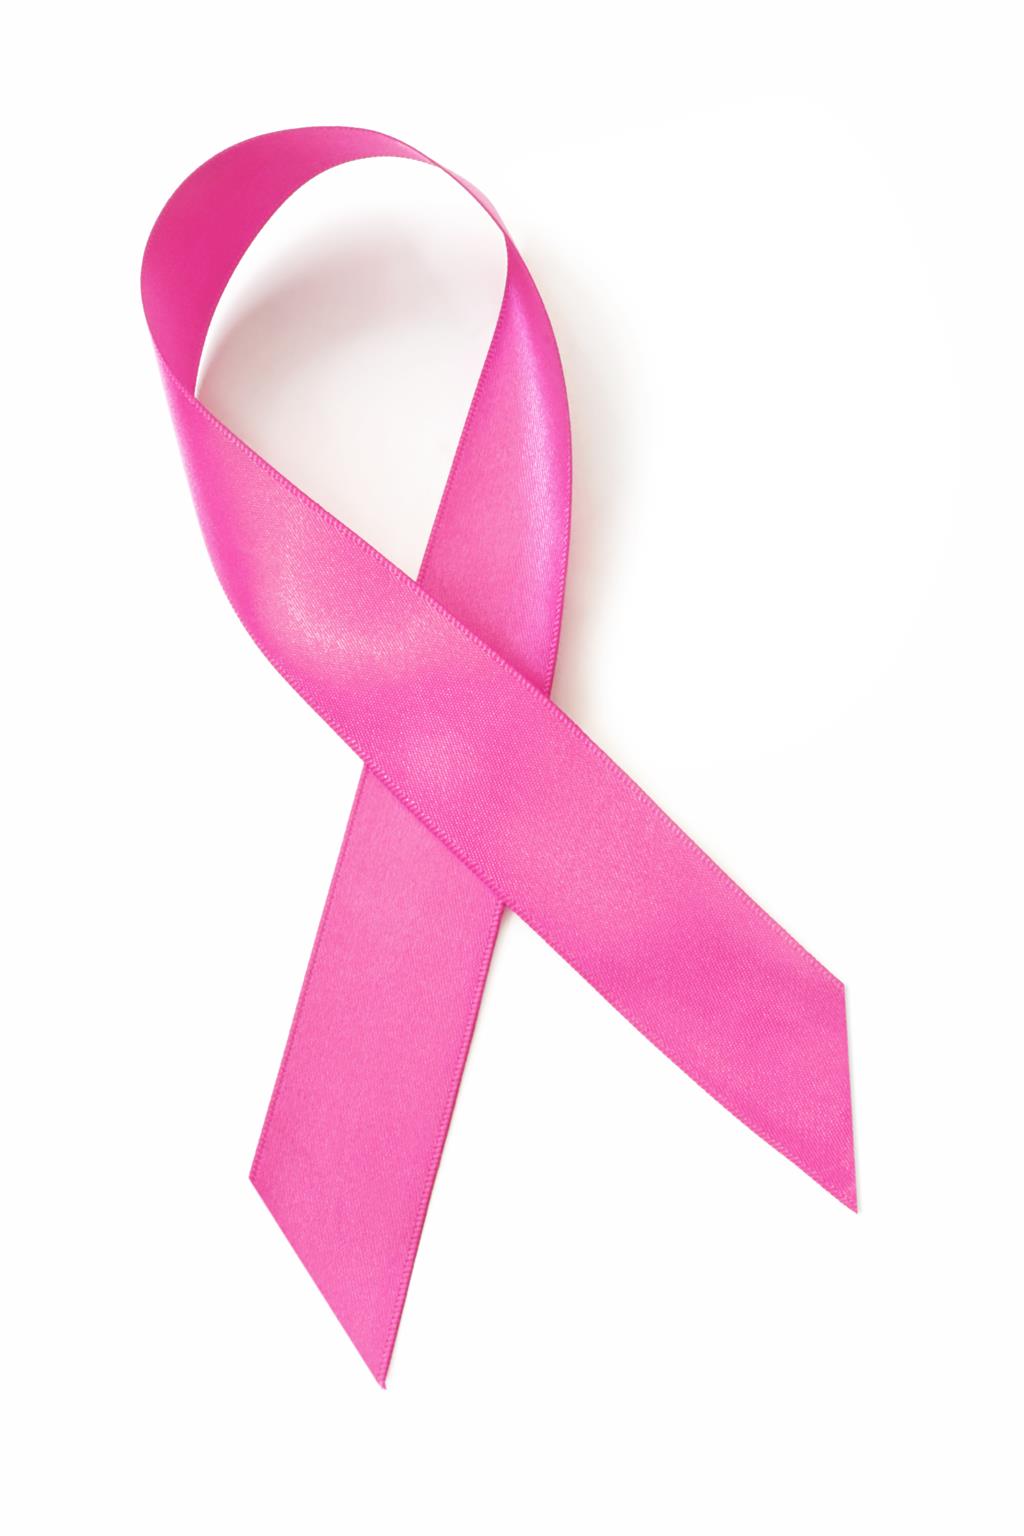 BHI Breast Cancer Awareness